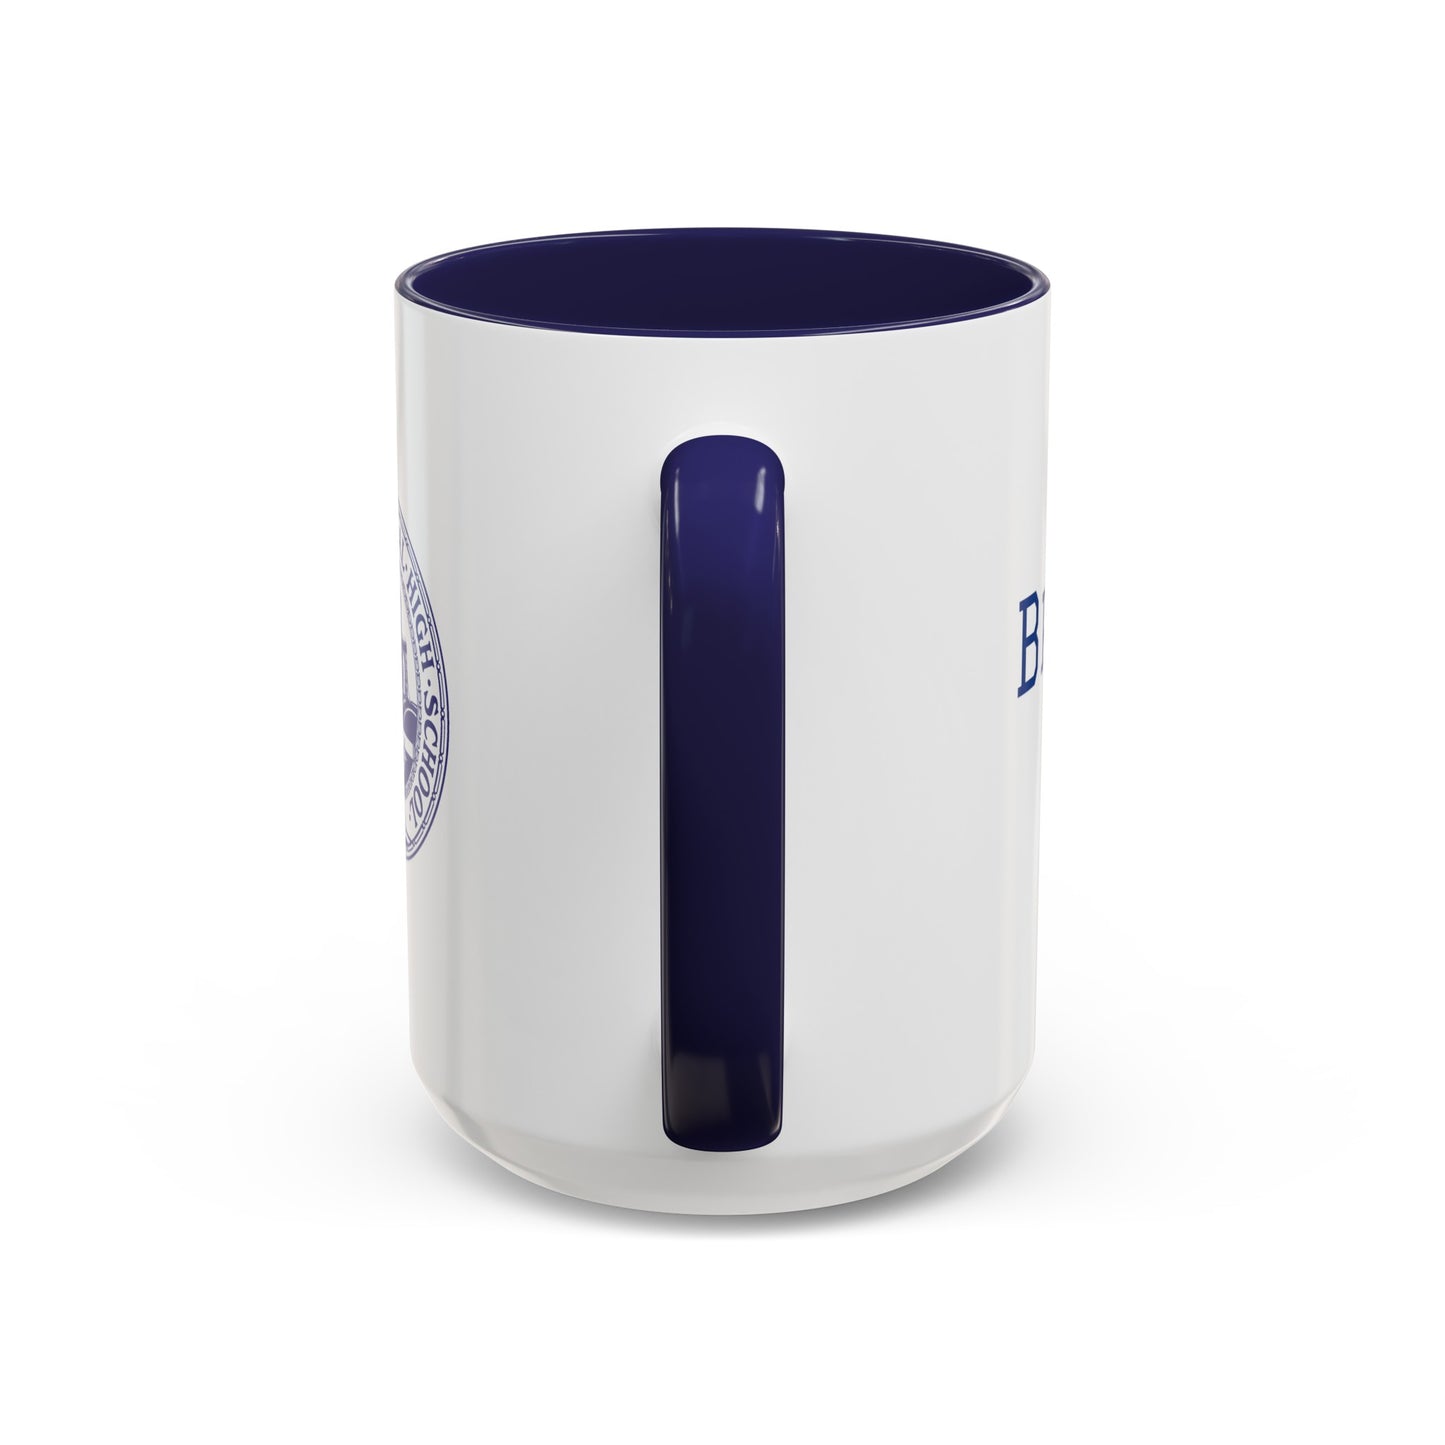 Classic Tech Logo - Accent Mug - White